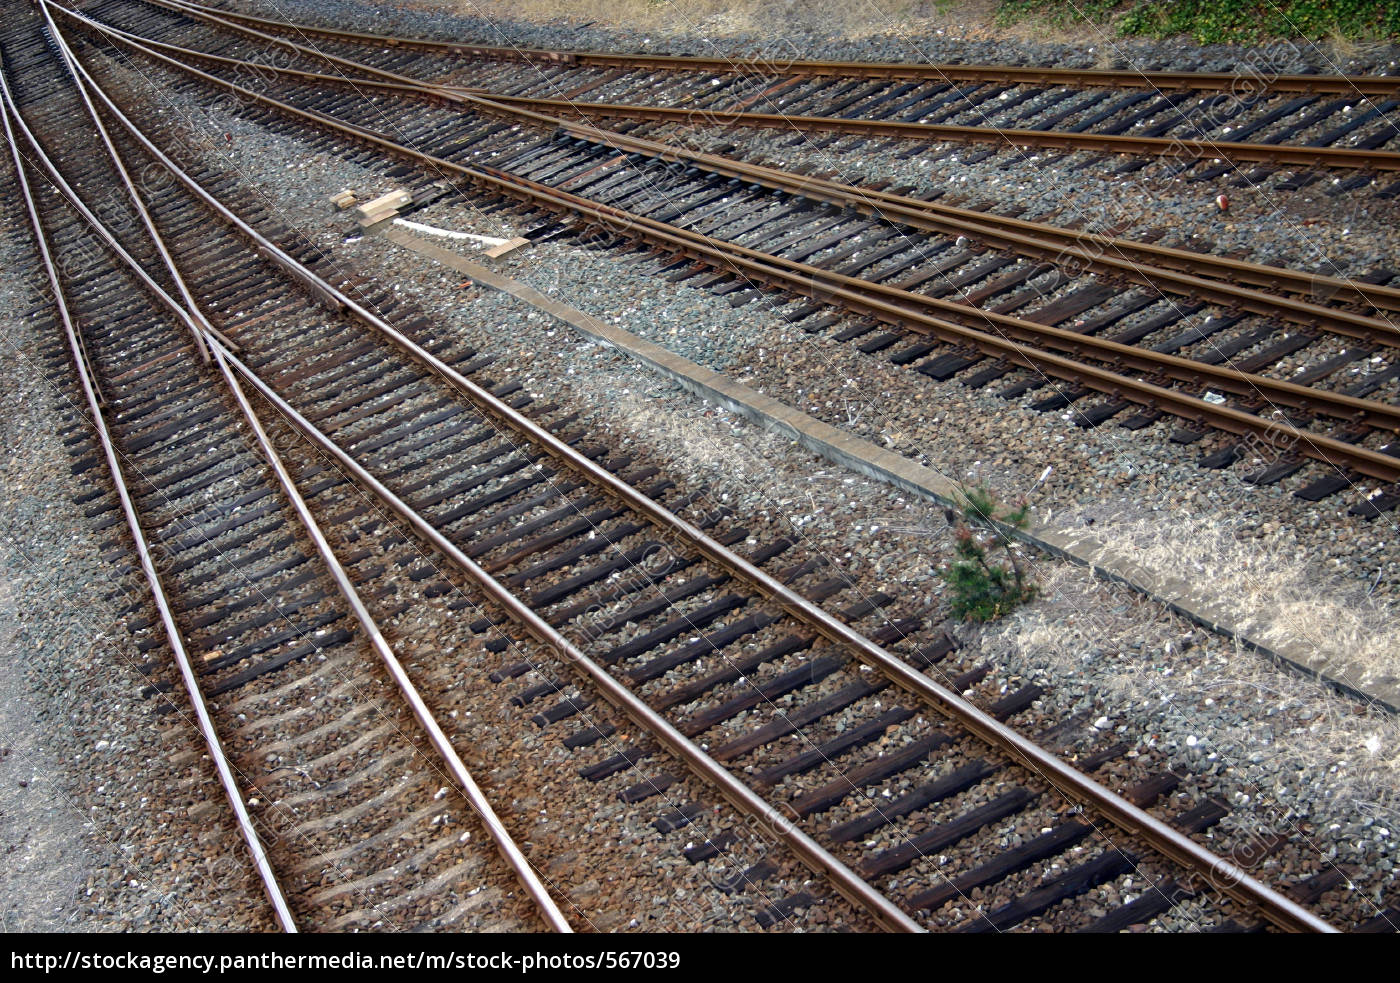 Eisenbahnschienen - Stockfoto - #567039 - Bildagentur PantherMedia